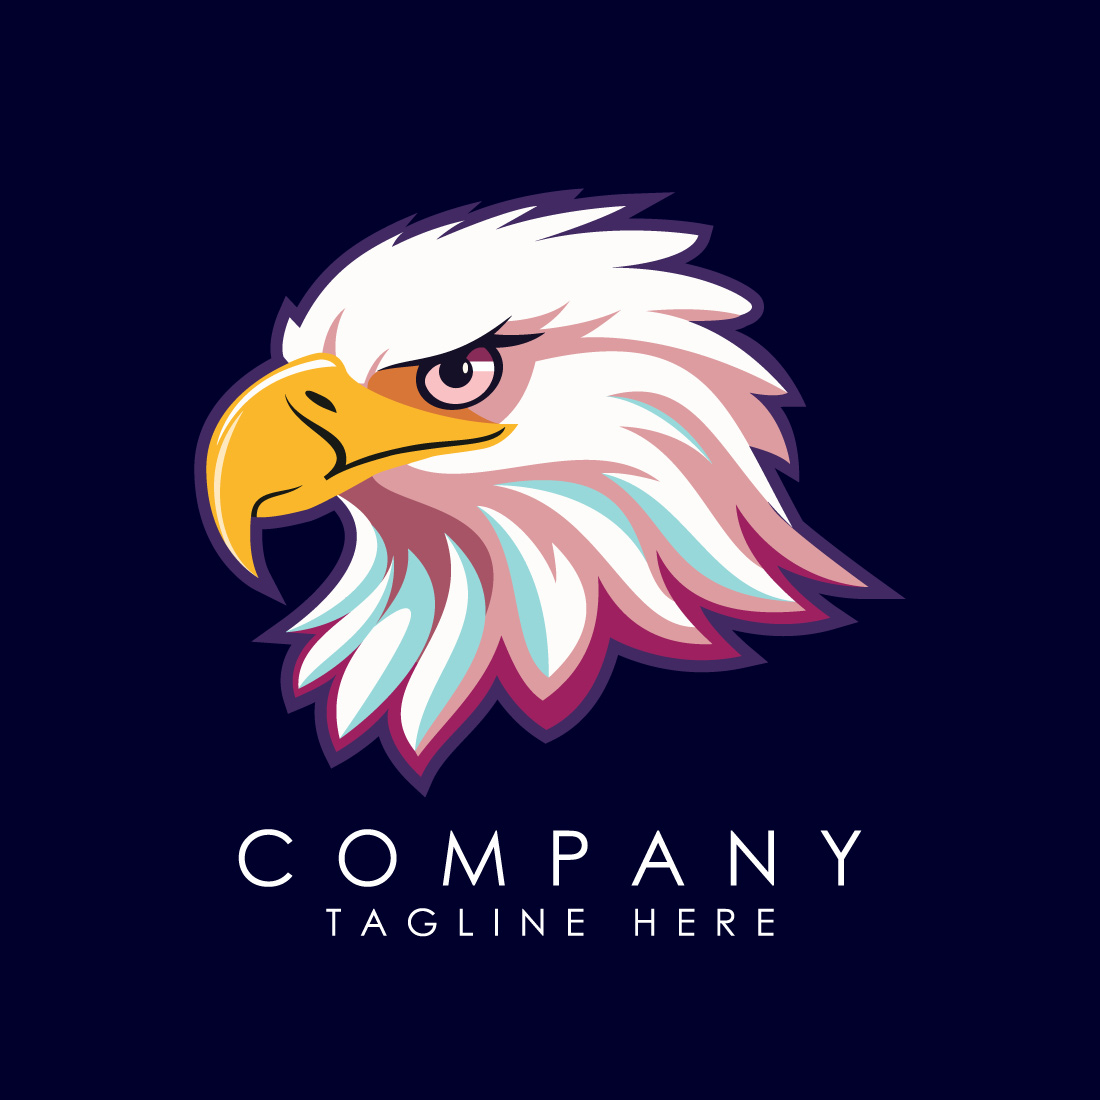 Eagle head logo vector illustration Mascot head of an Eagle cover image.